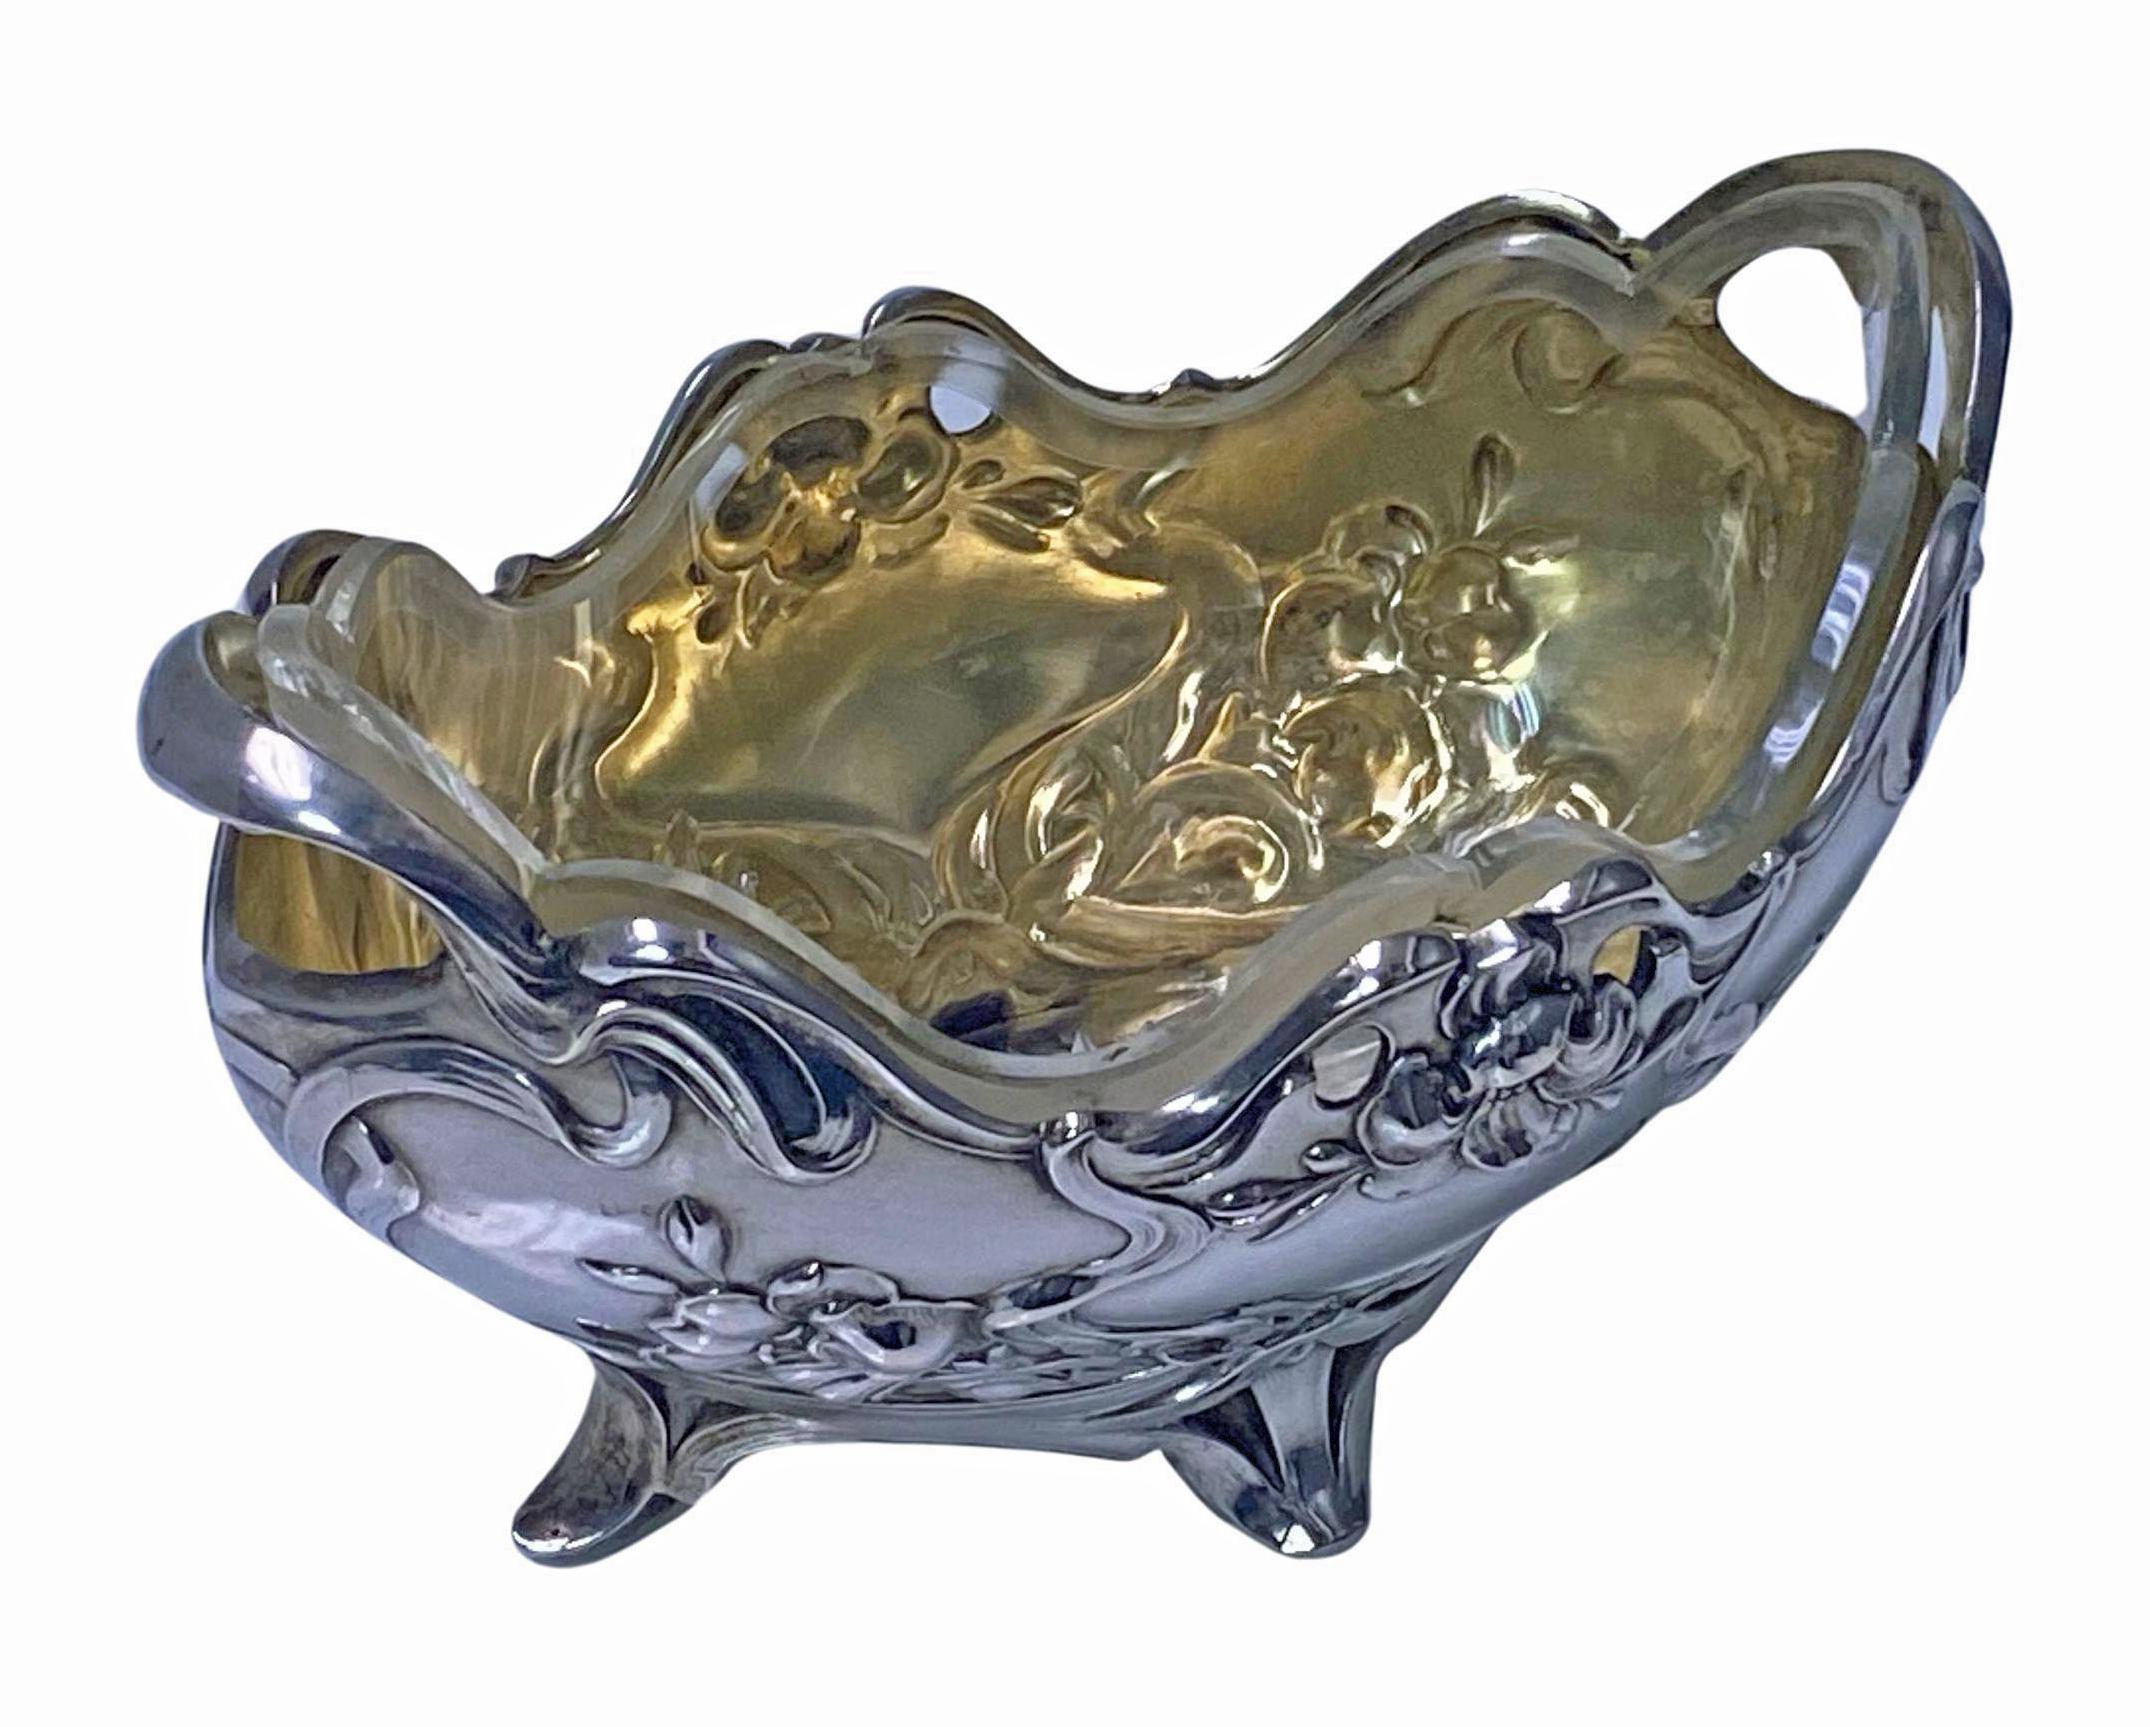 Late 19th Century Art Nouveau Silver and glass dish, C.1890 E. Schurmann & Co. Frankfurt, Germany.